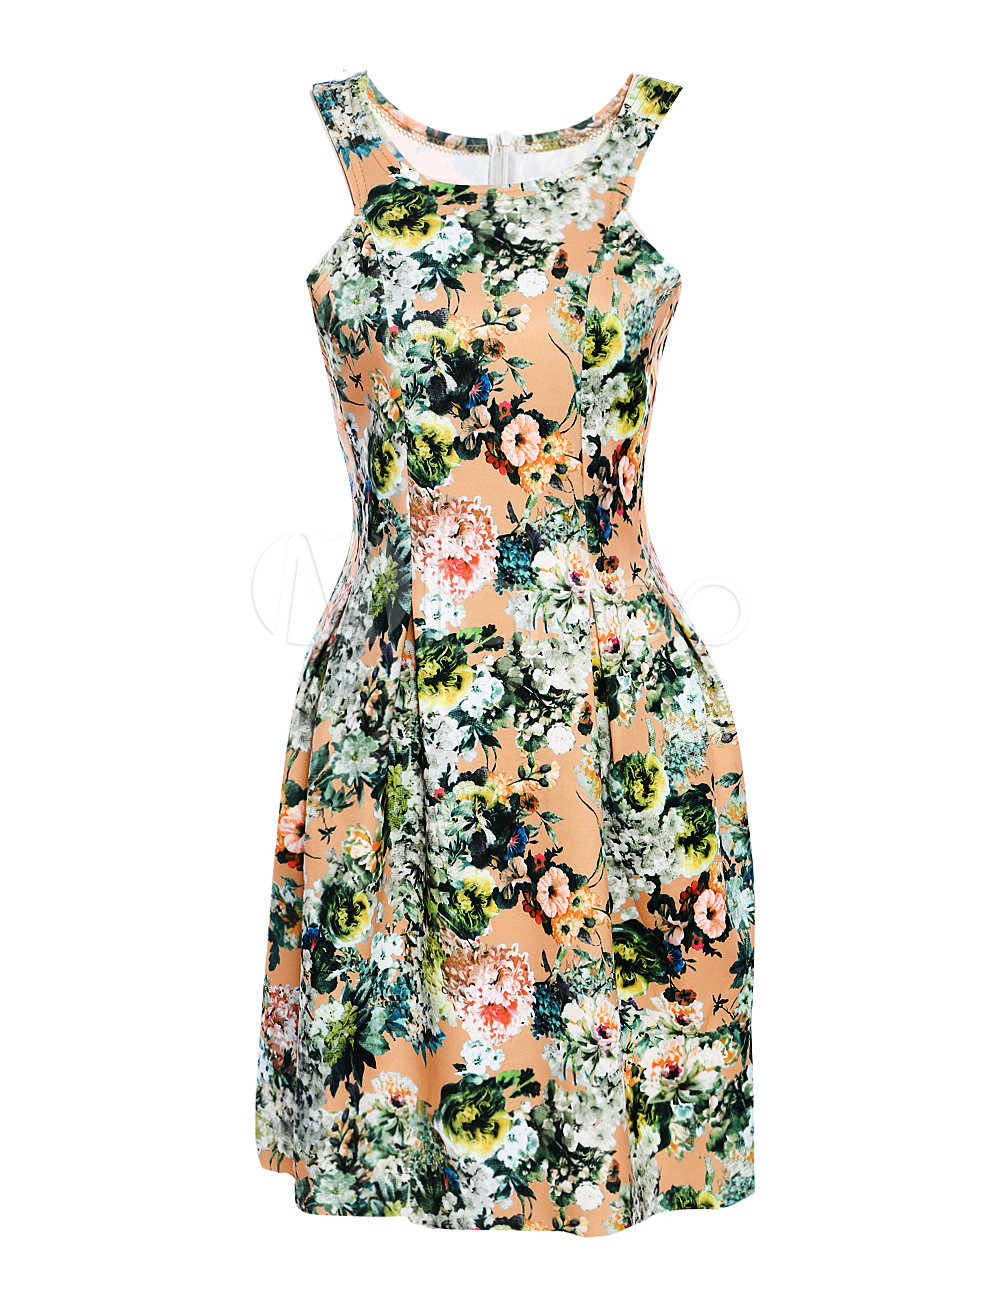 Multi Color Sleeveless Floral Print Skater Dress for Woman - Milanoo.com